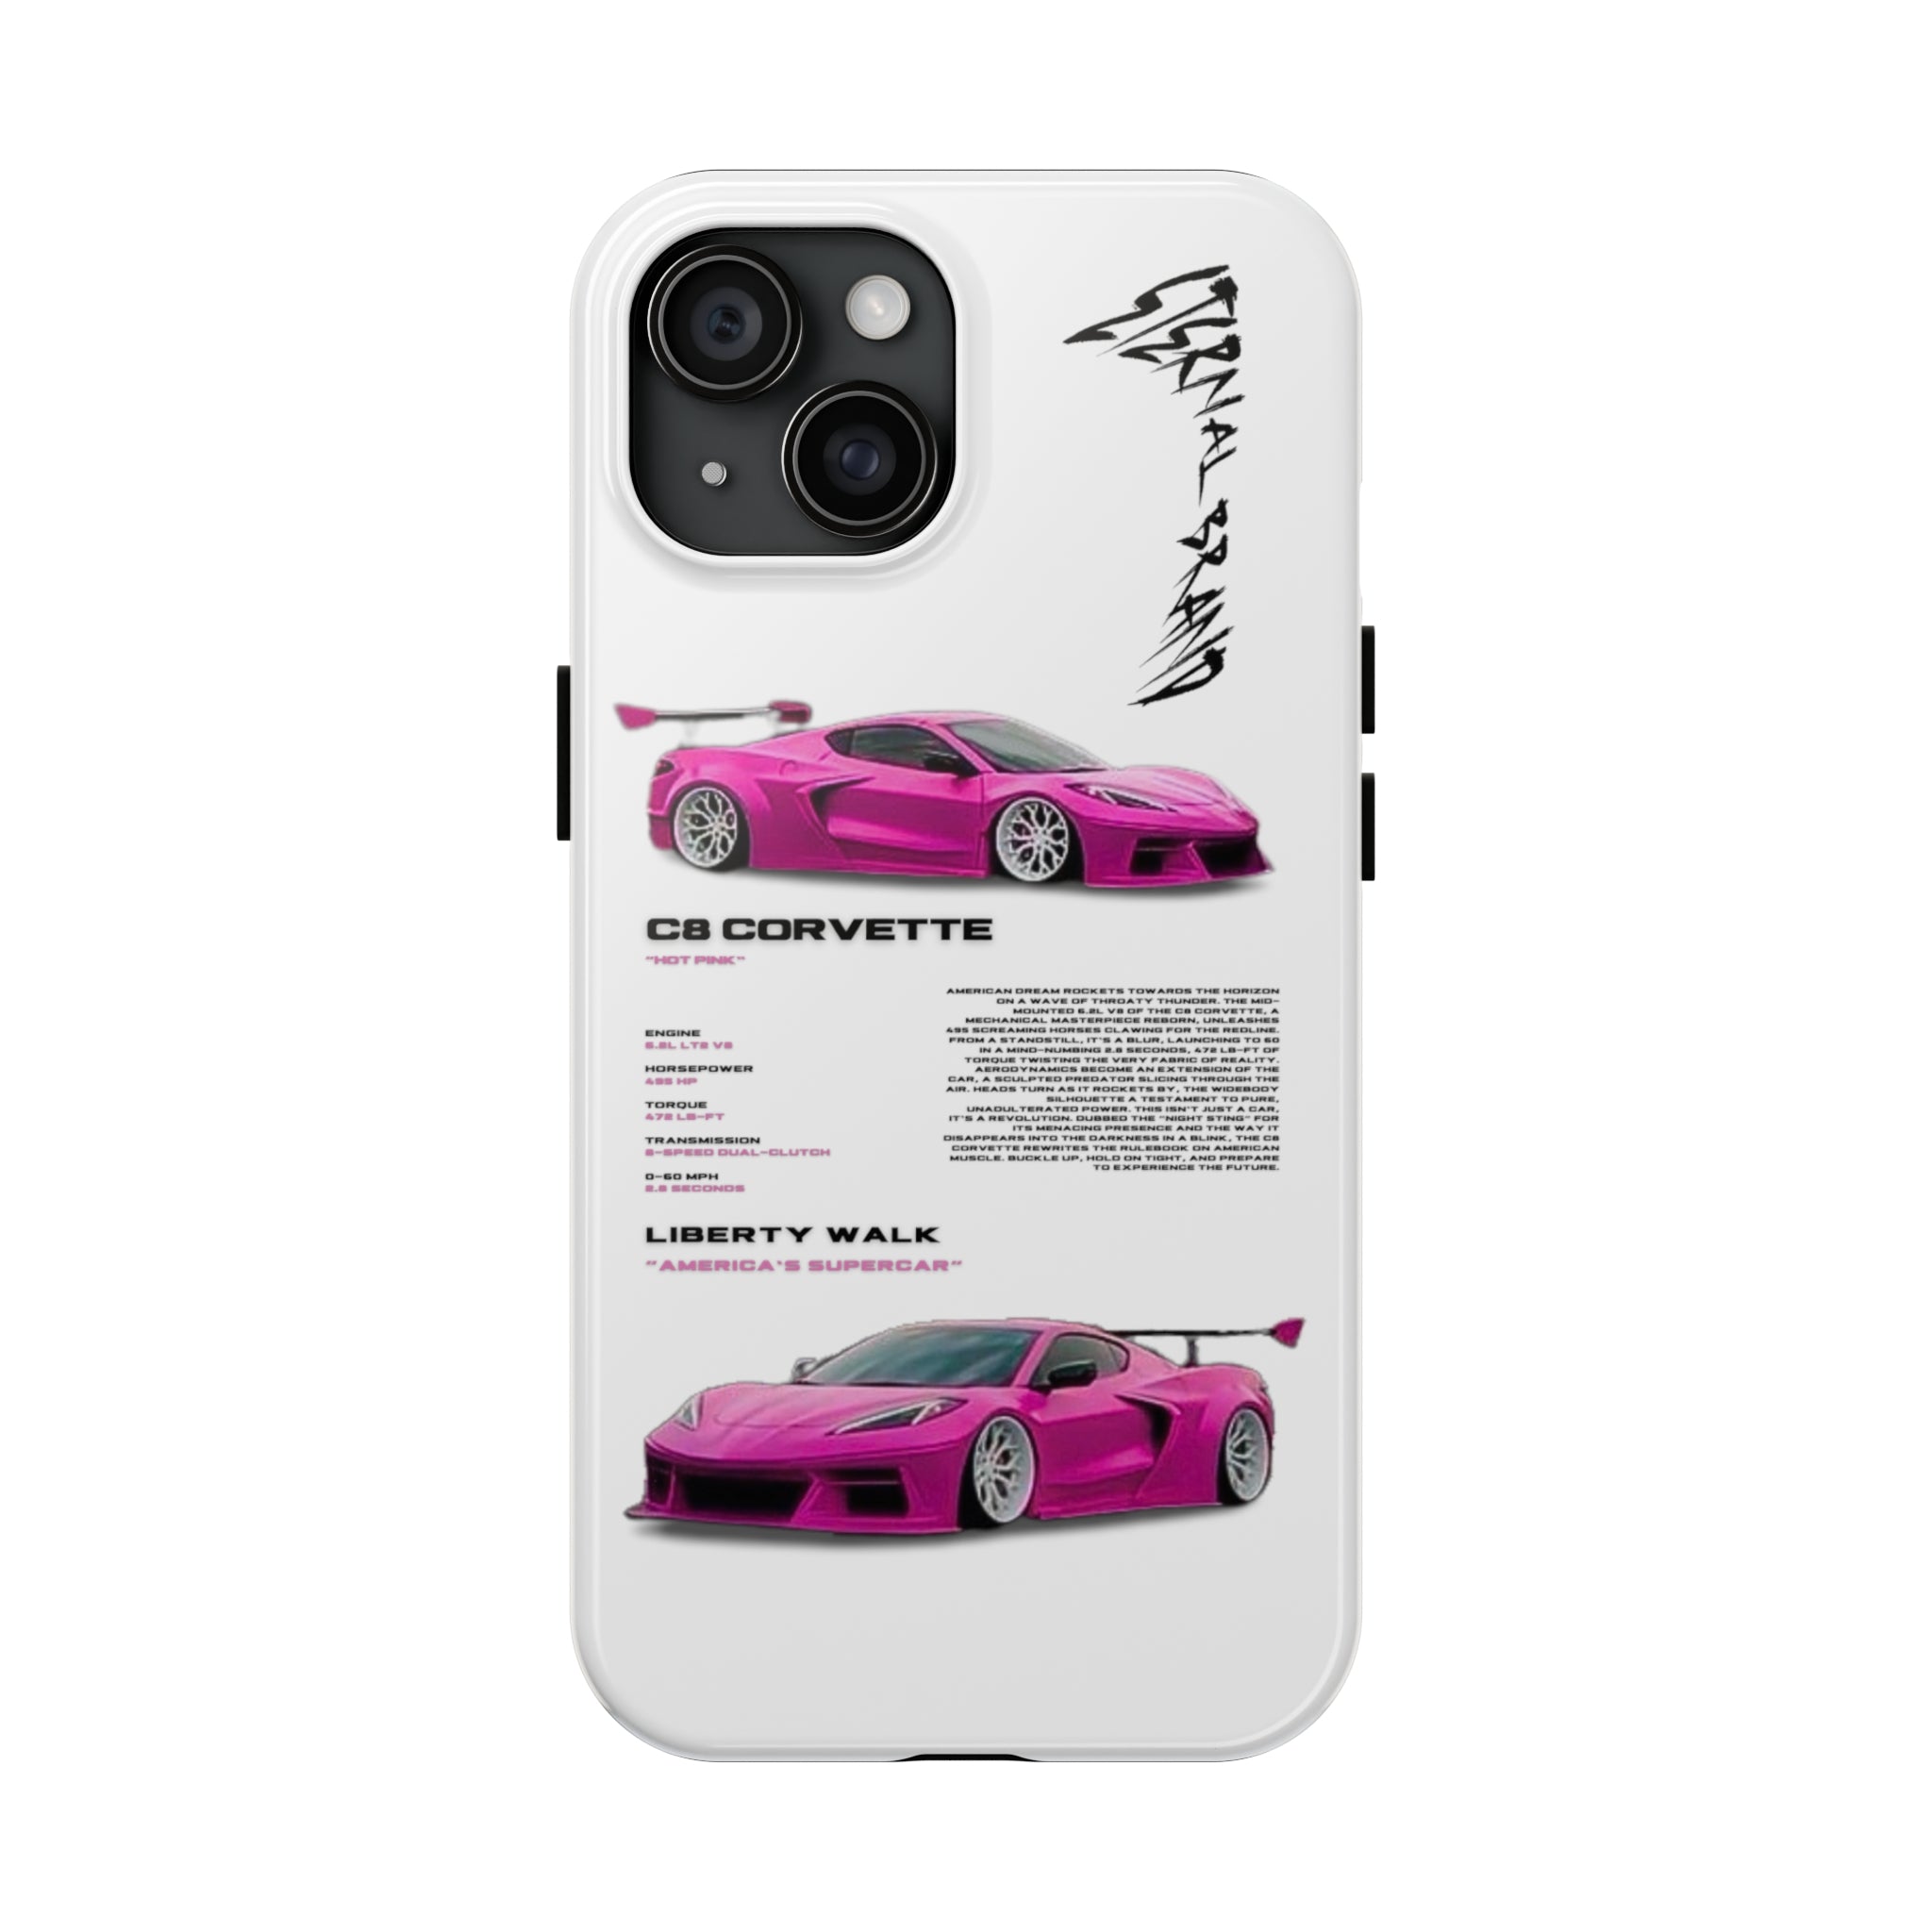 C8 Corvette "Hot Pink" "White"